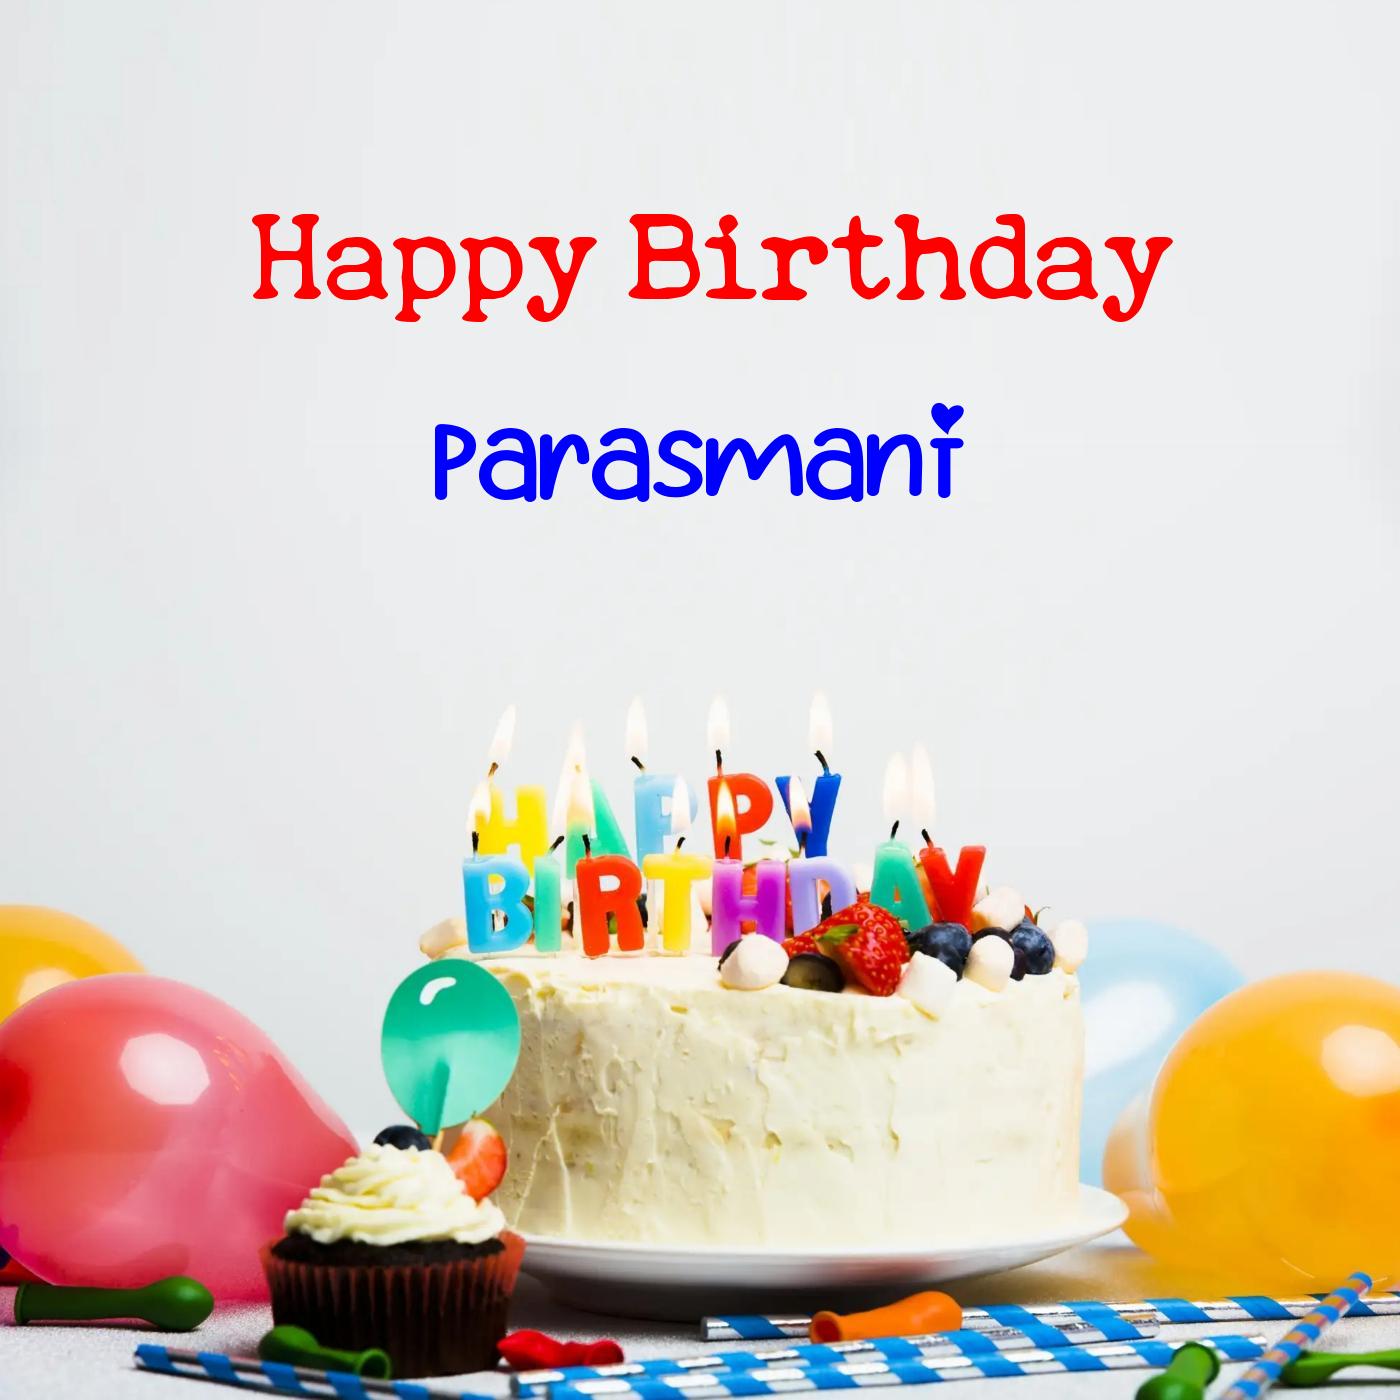 Happy Birthday Parasmani Cake Balloons Card